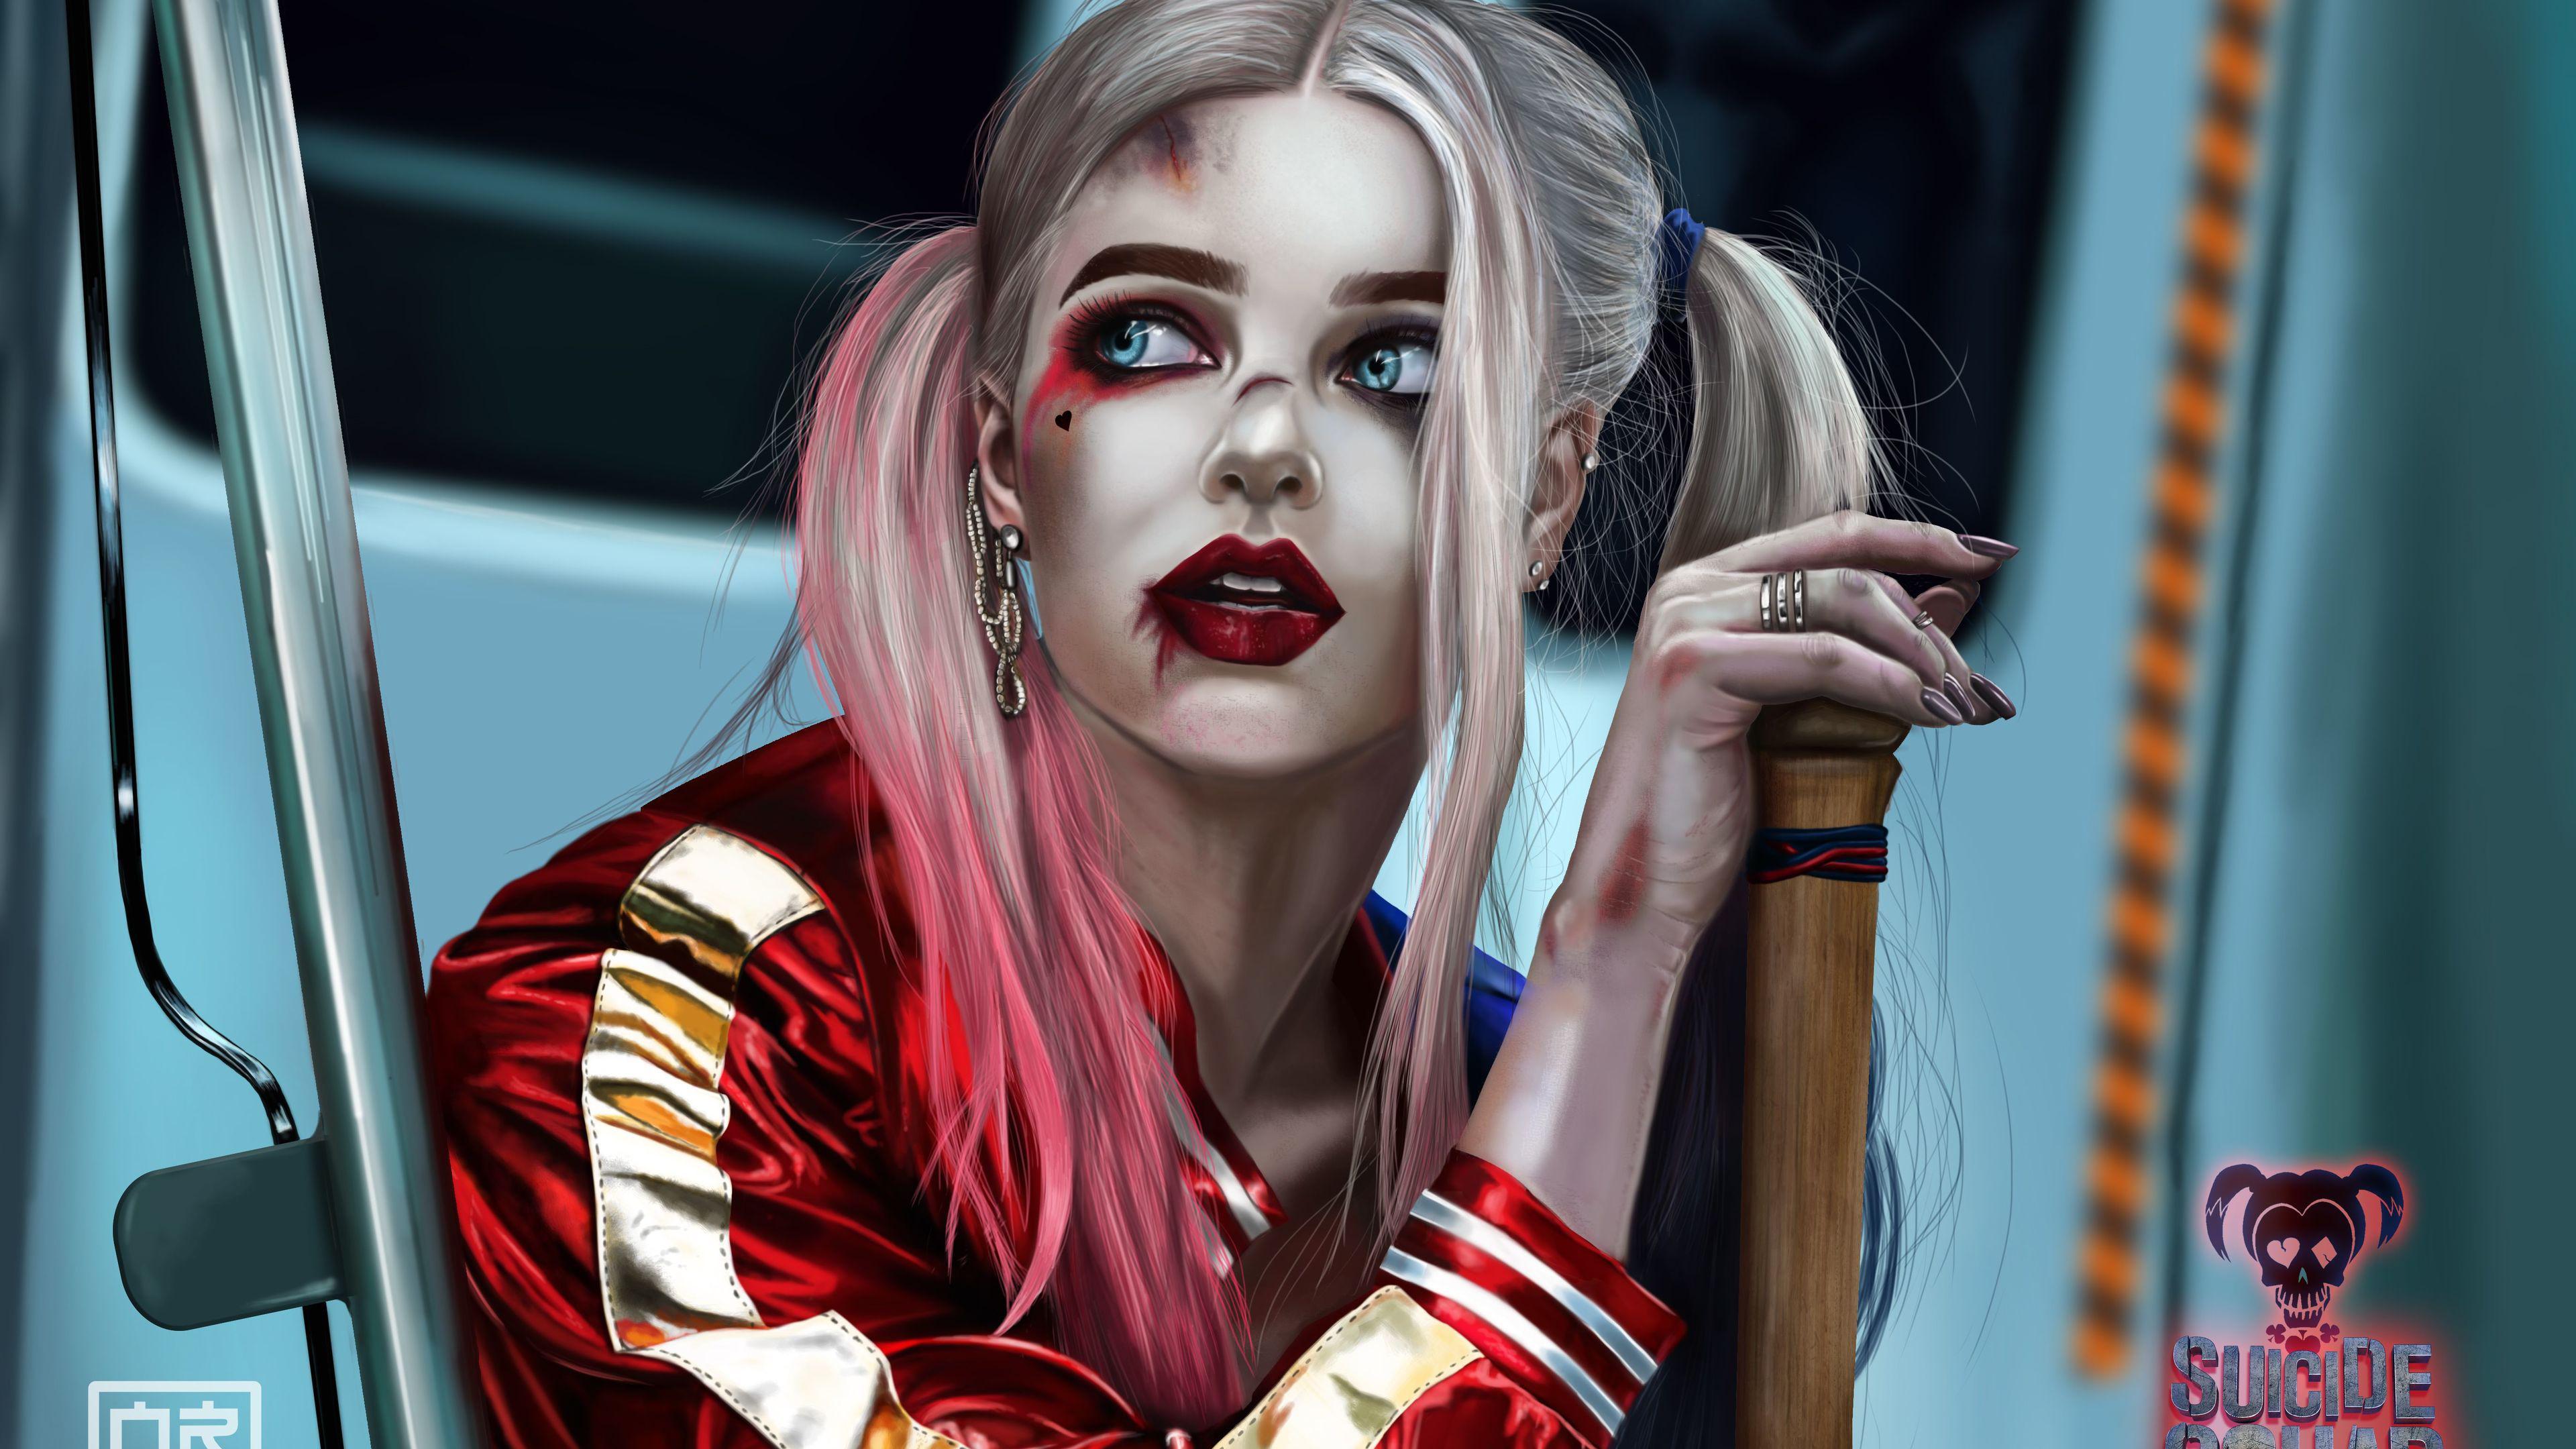 Wallpaper Suicide Squad Harley Quinn Margot Robbie Quinn Wallpaper 4k